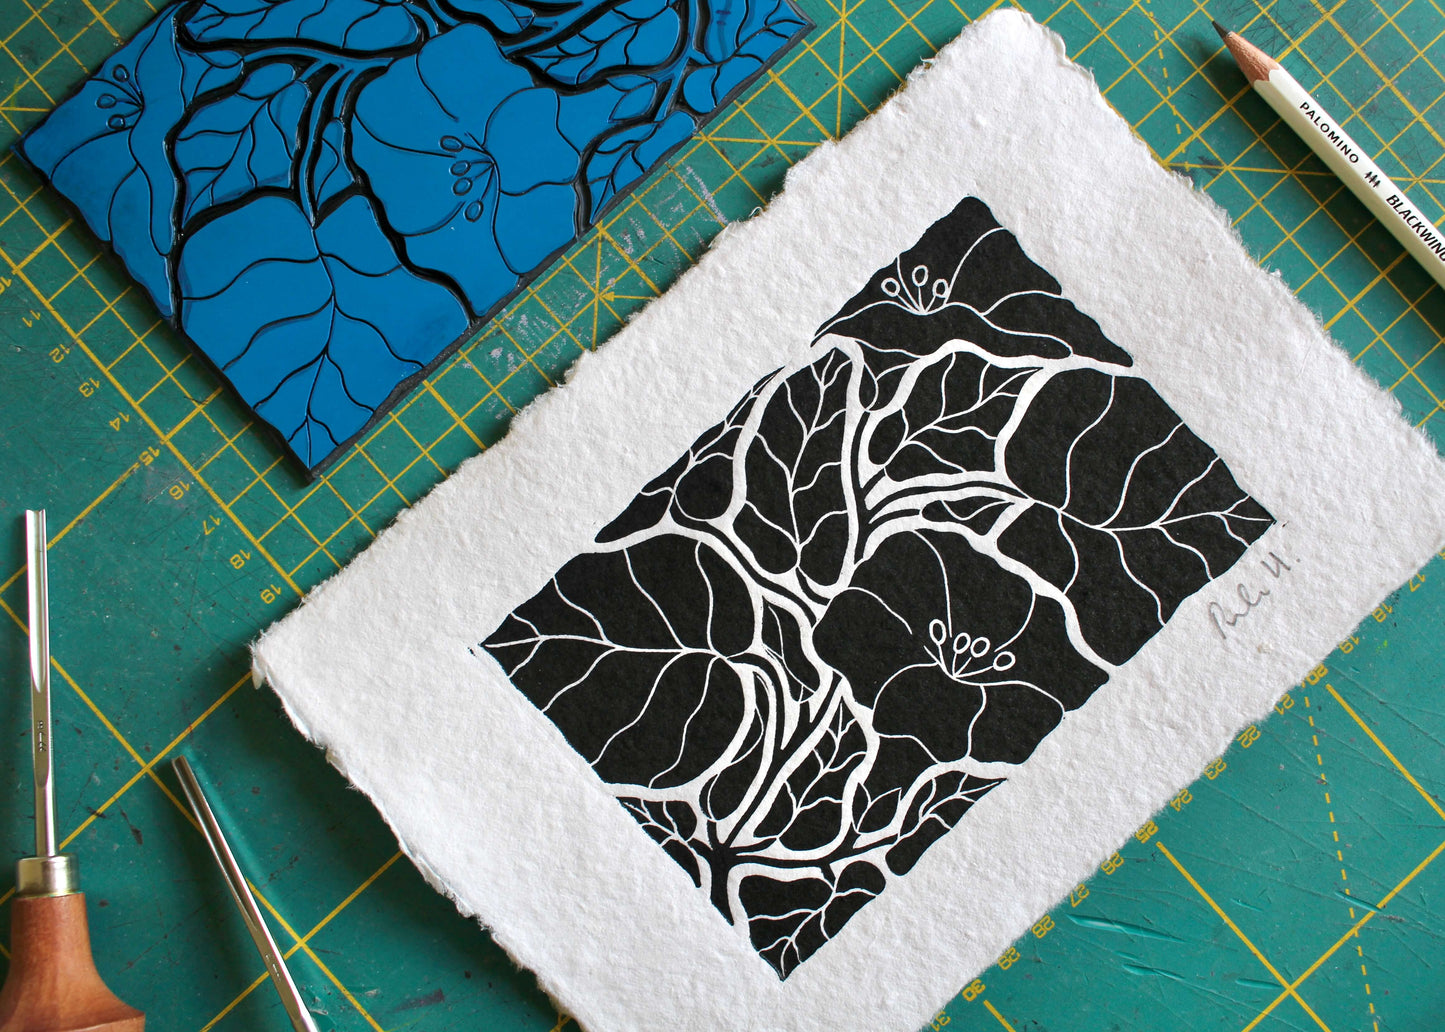 Hand Printed Morning Glory Linocut on Cotton Rag Paper